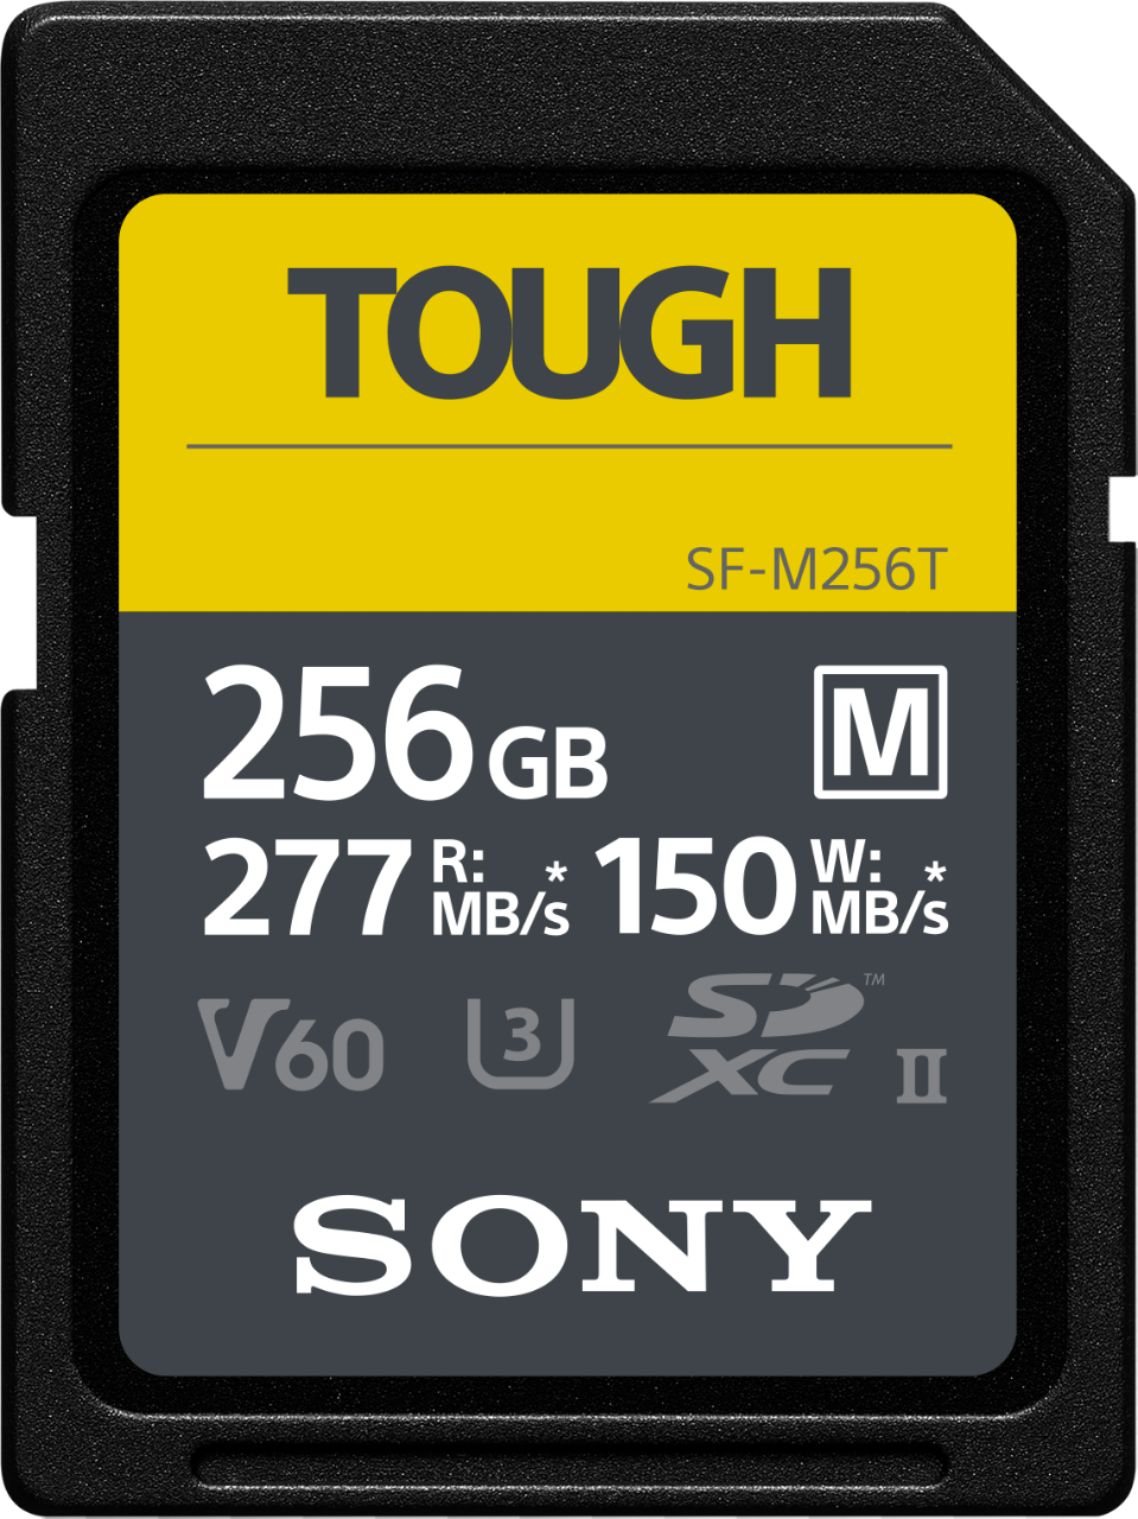 Sony TOUGH-M series SDXC UHS-II Card - 256B